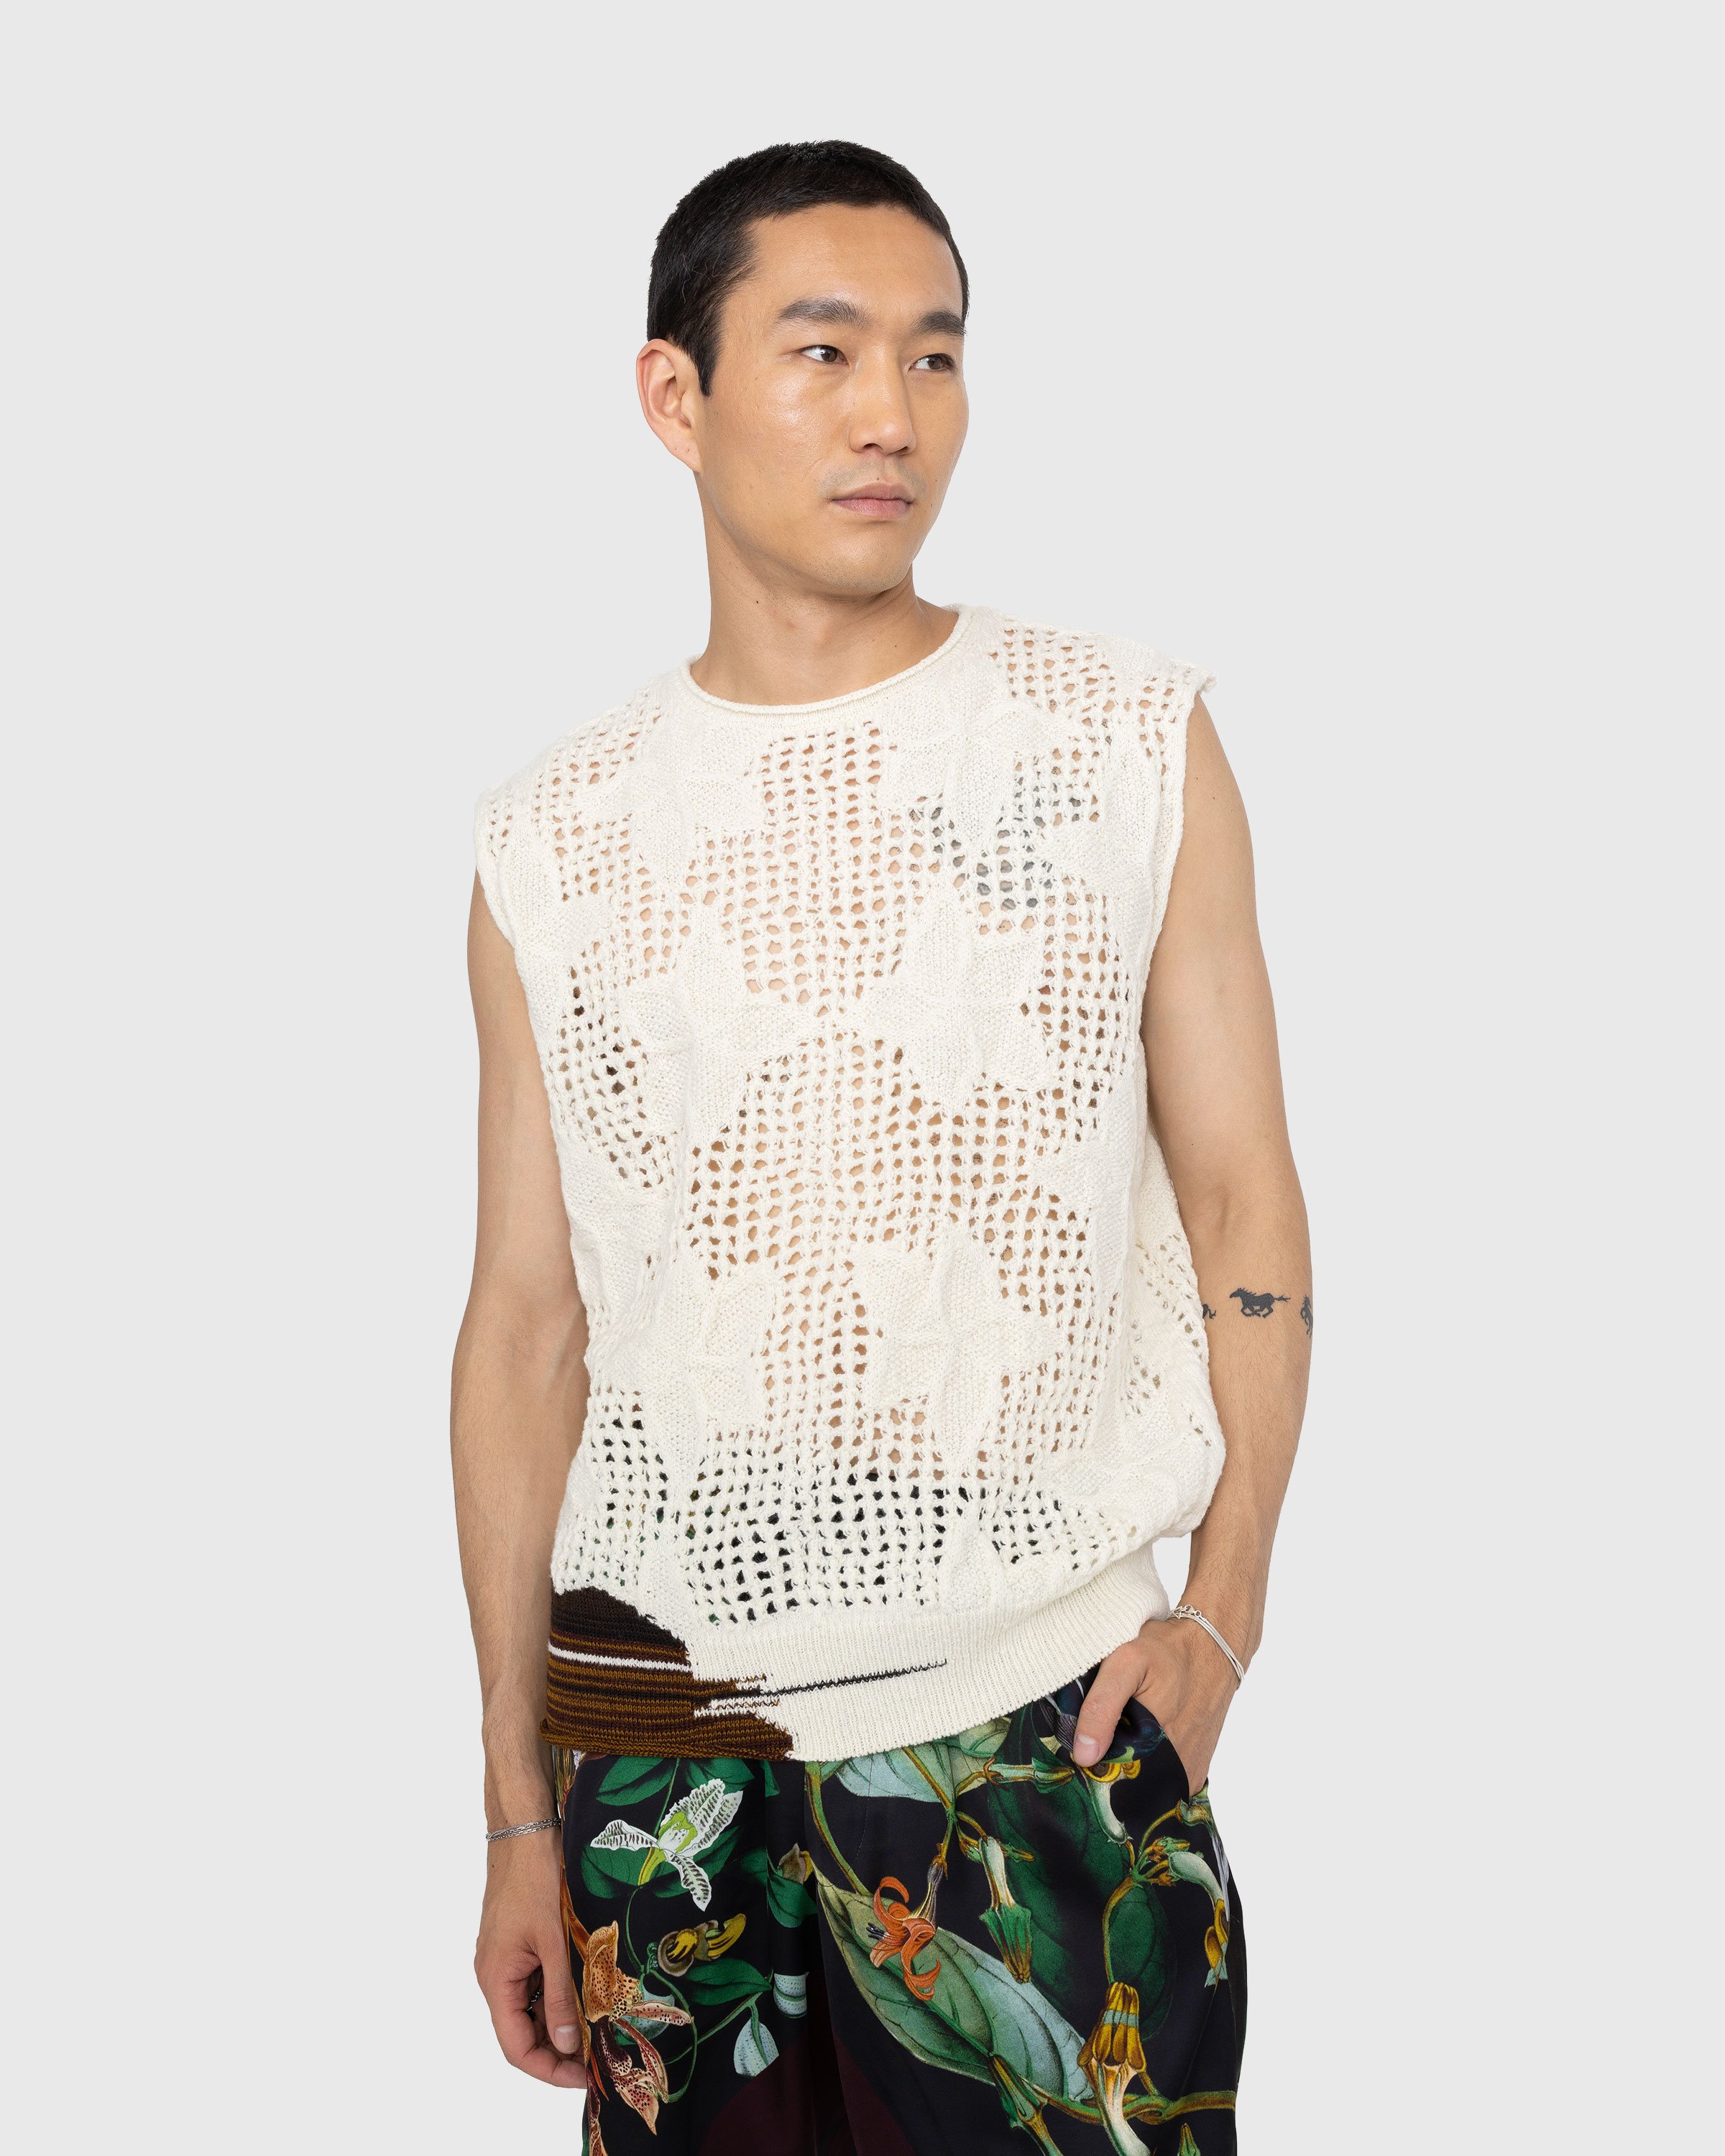 Dries van Noten - Meddo Knit Sweater Vest Ecru - Clothing - White - Image 2